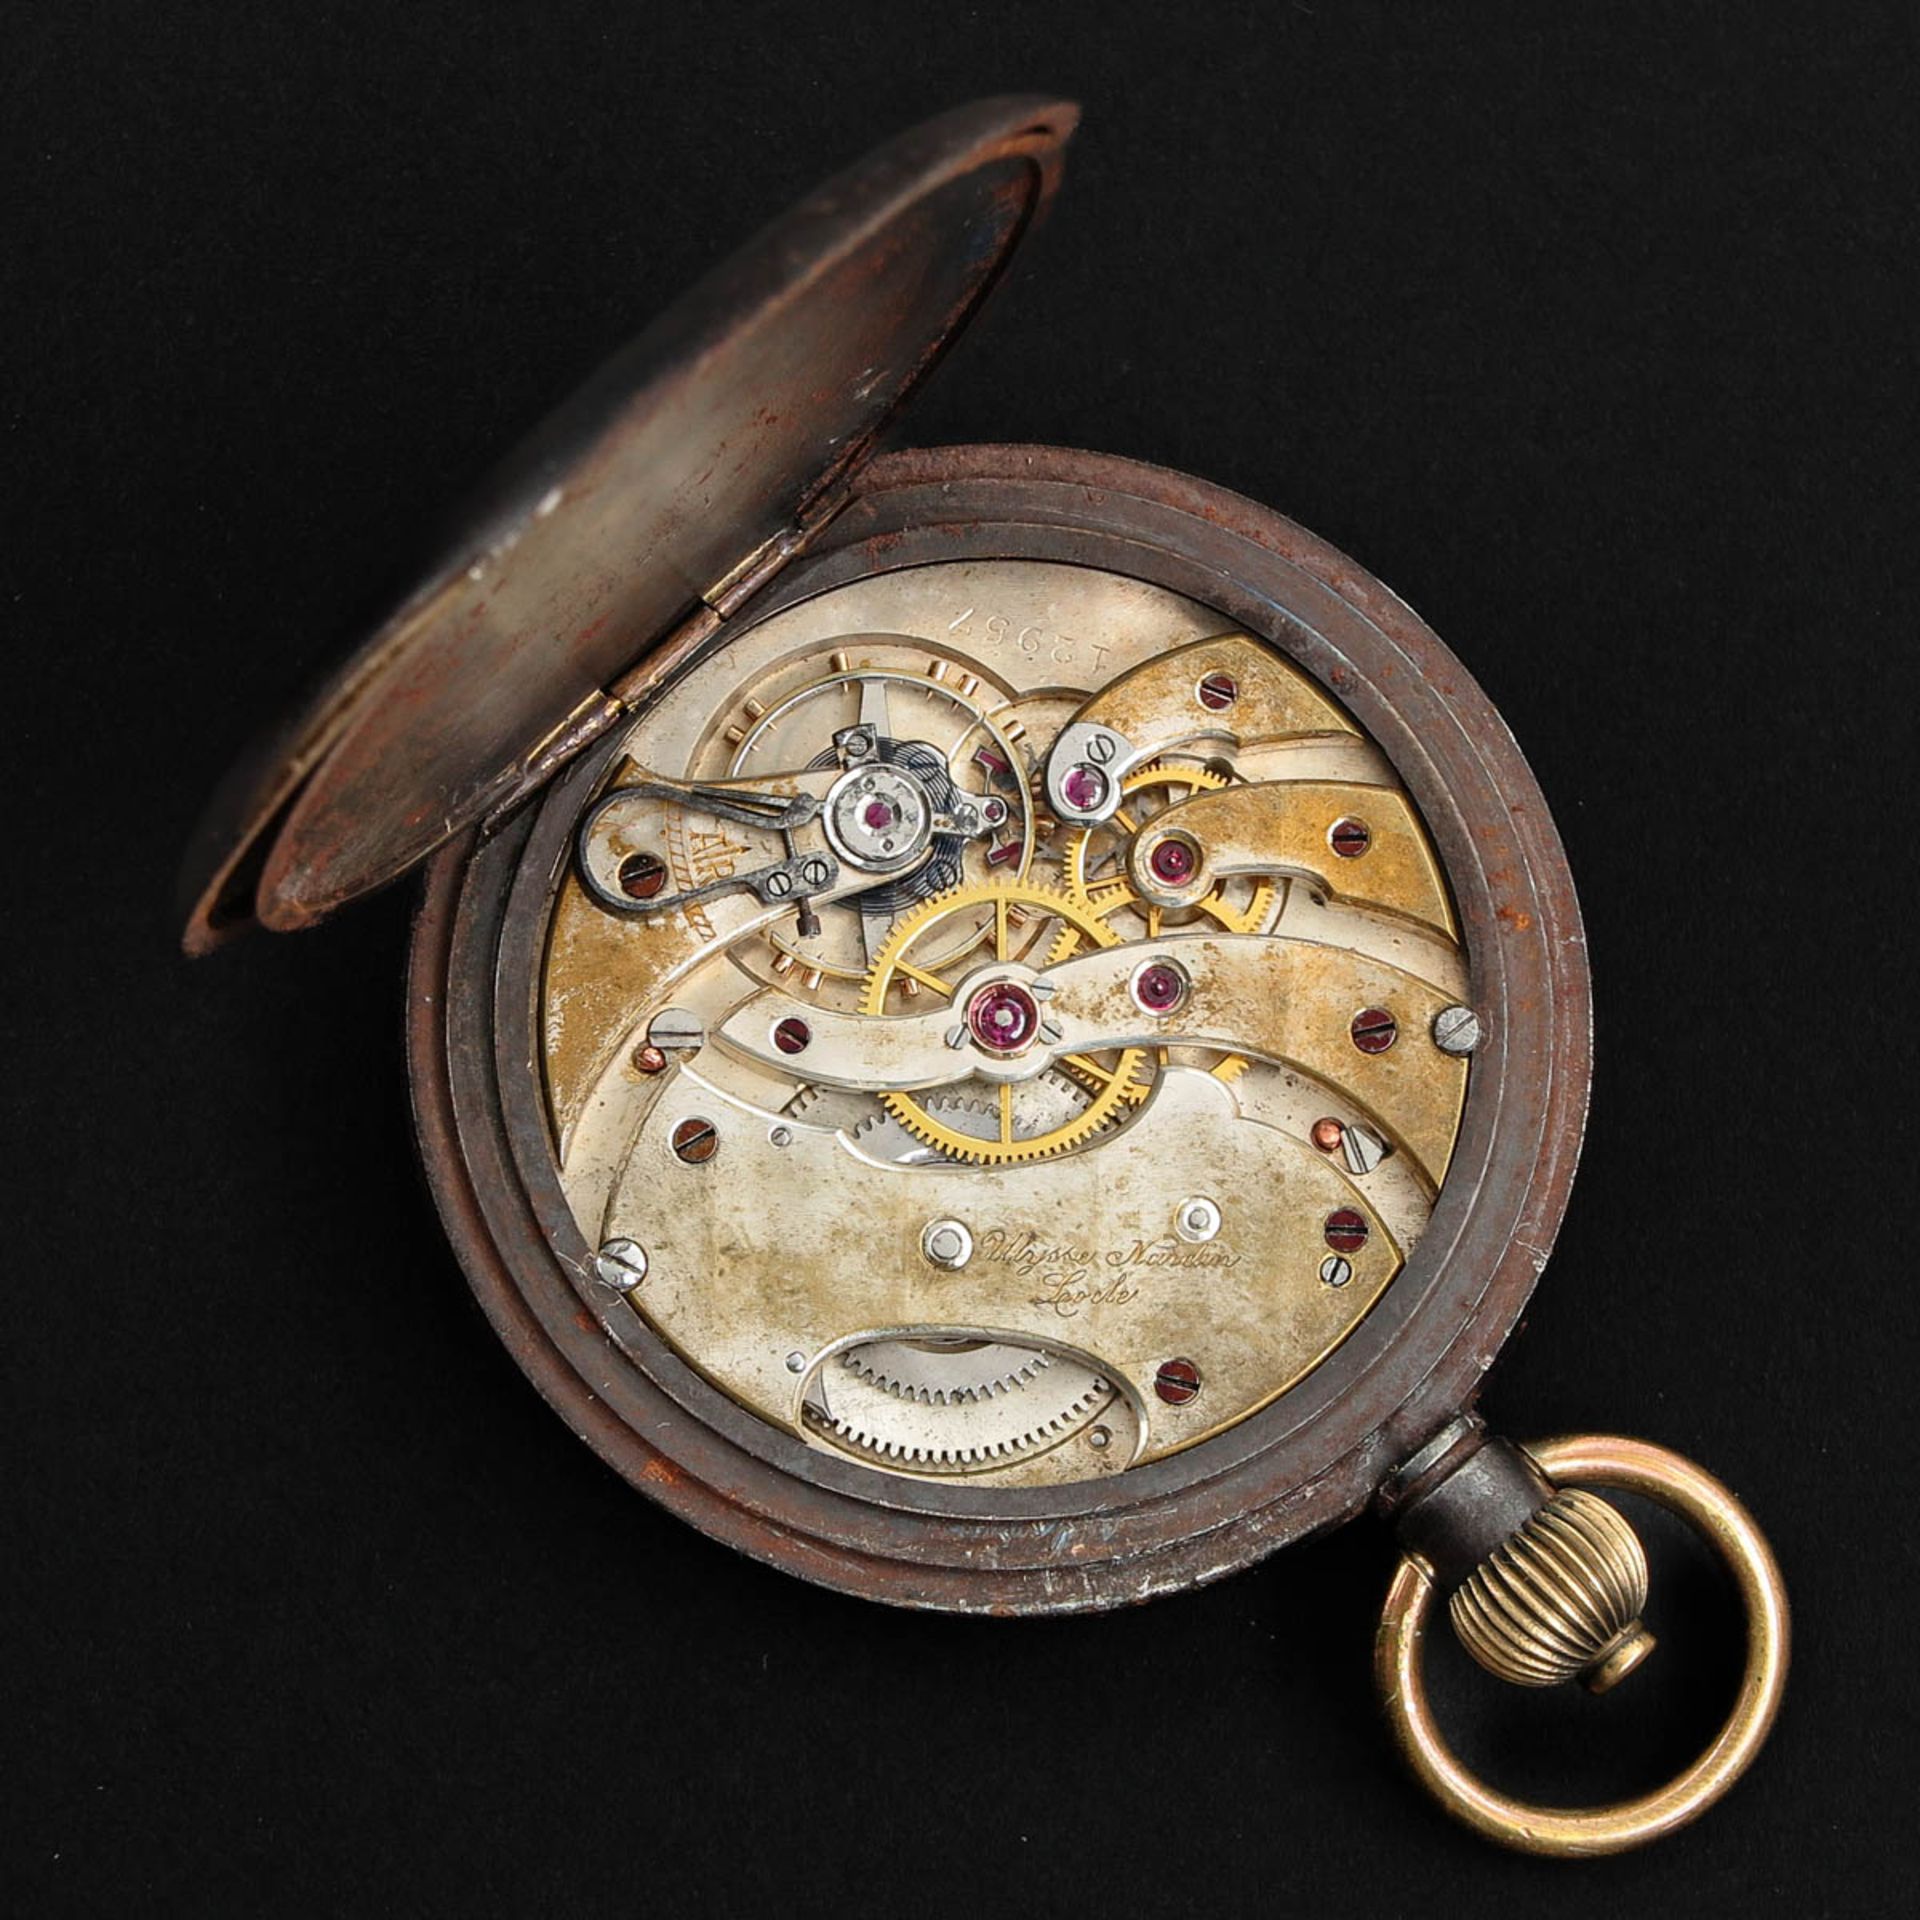 A Ulysse Nardin Locle Pocket Watch - Image 6 of 8